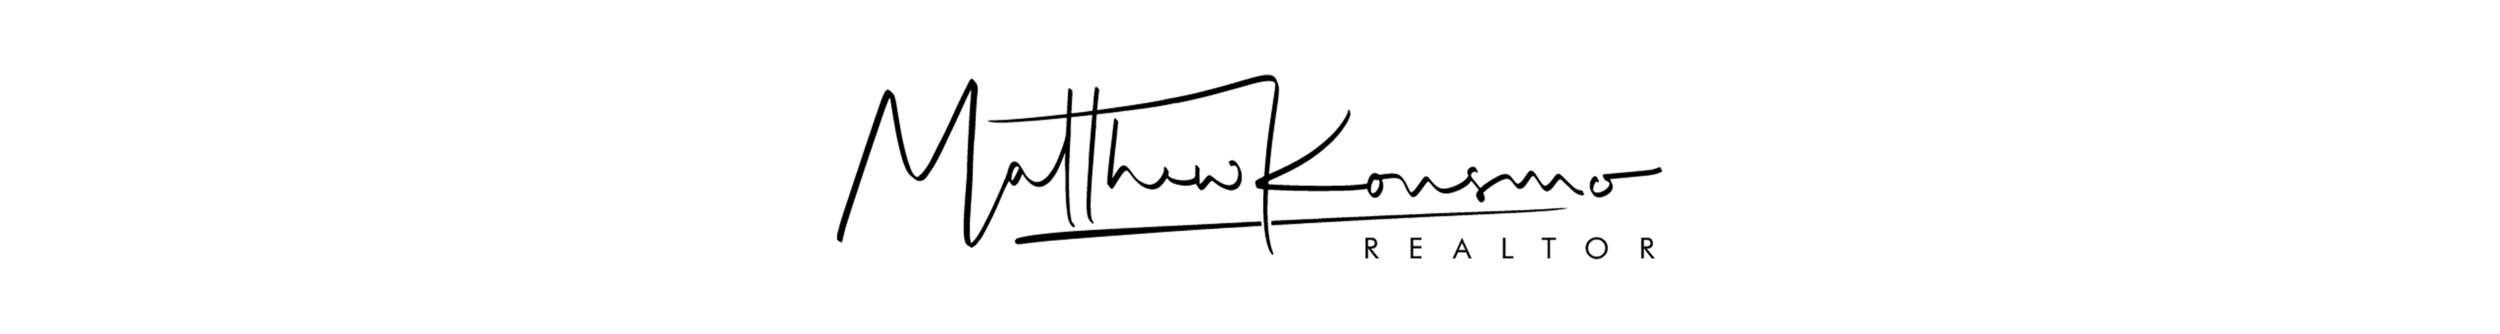 Matthew Konsmo Signature logo